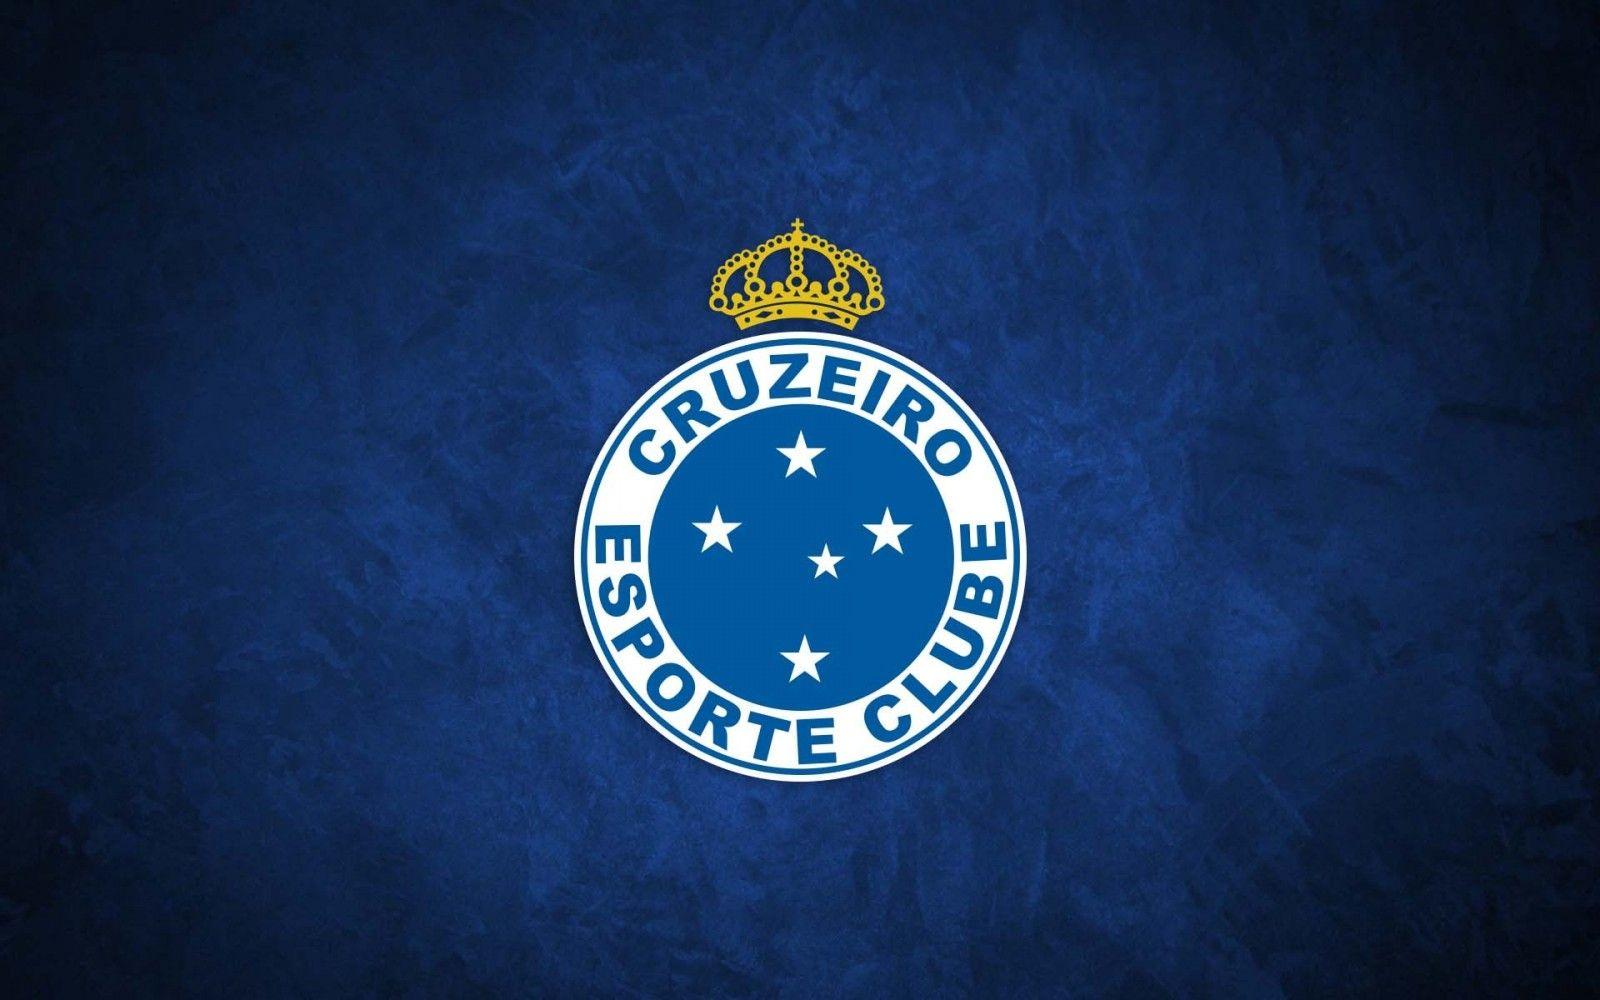 Blue Circle Soccer Logo - Wallpaper : illustration, blue background, logo, circle, soccer ...